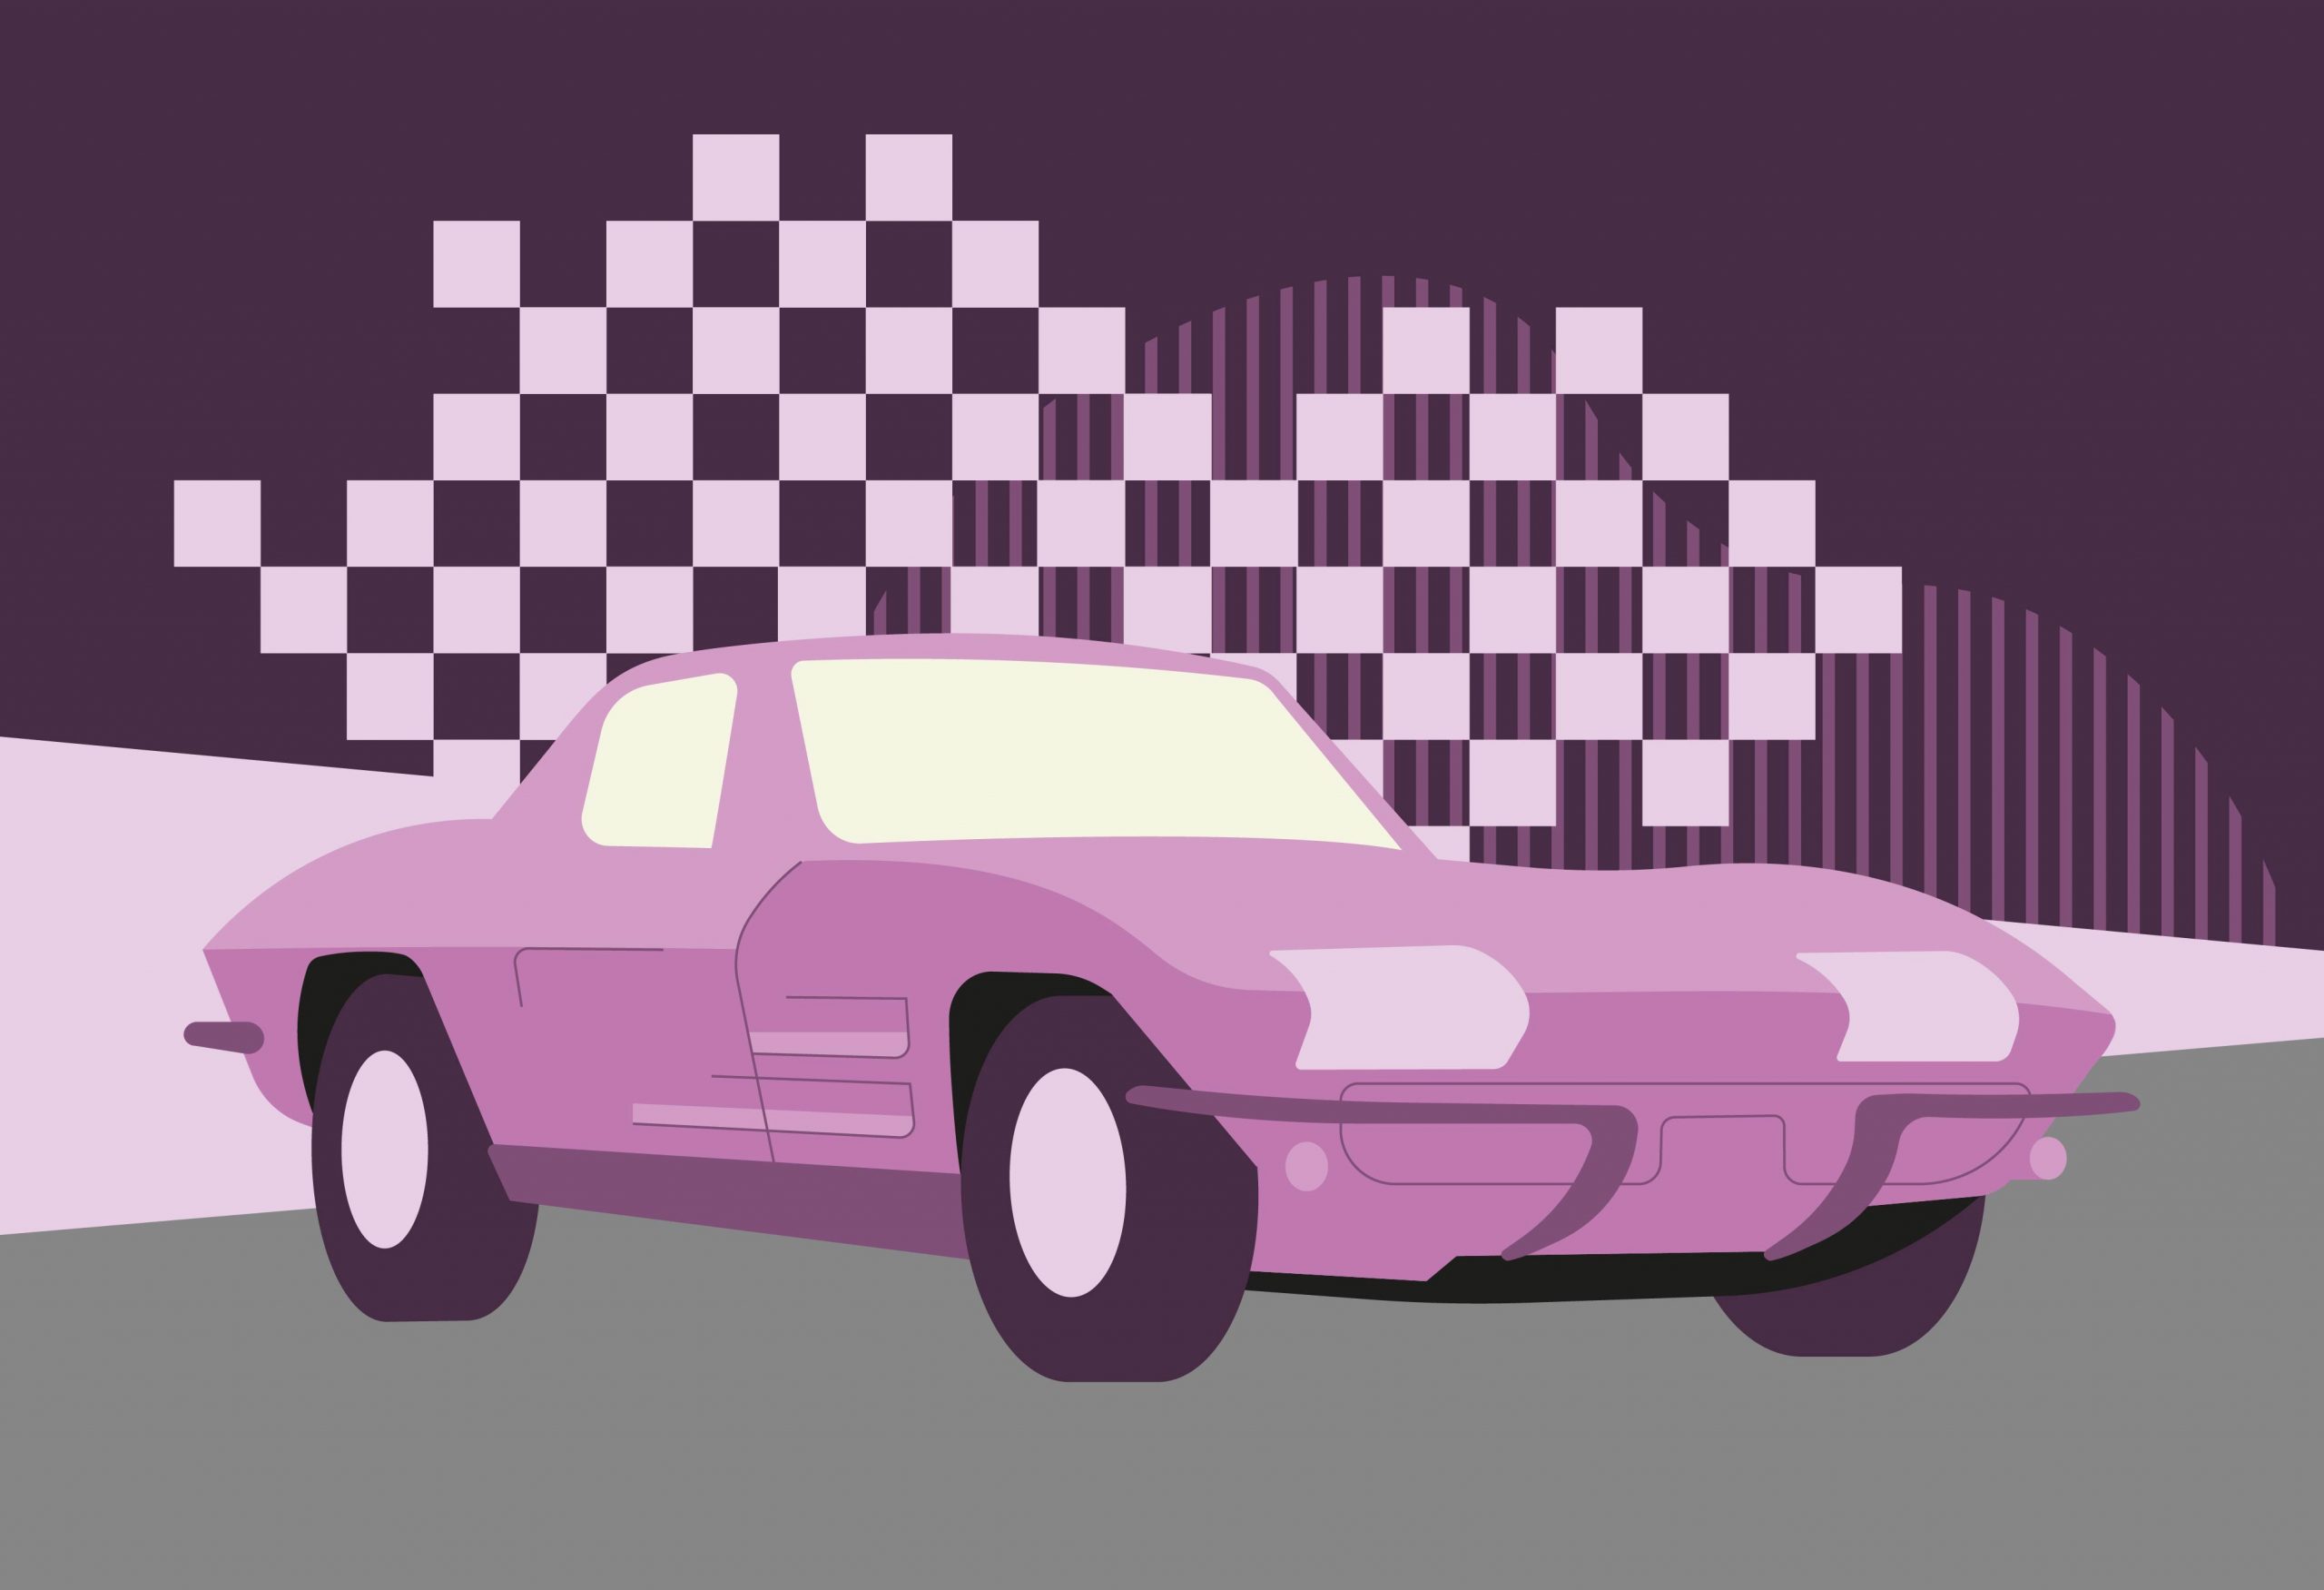 Corvette Sting Ray illustration